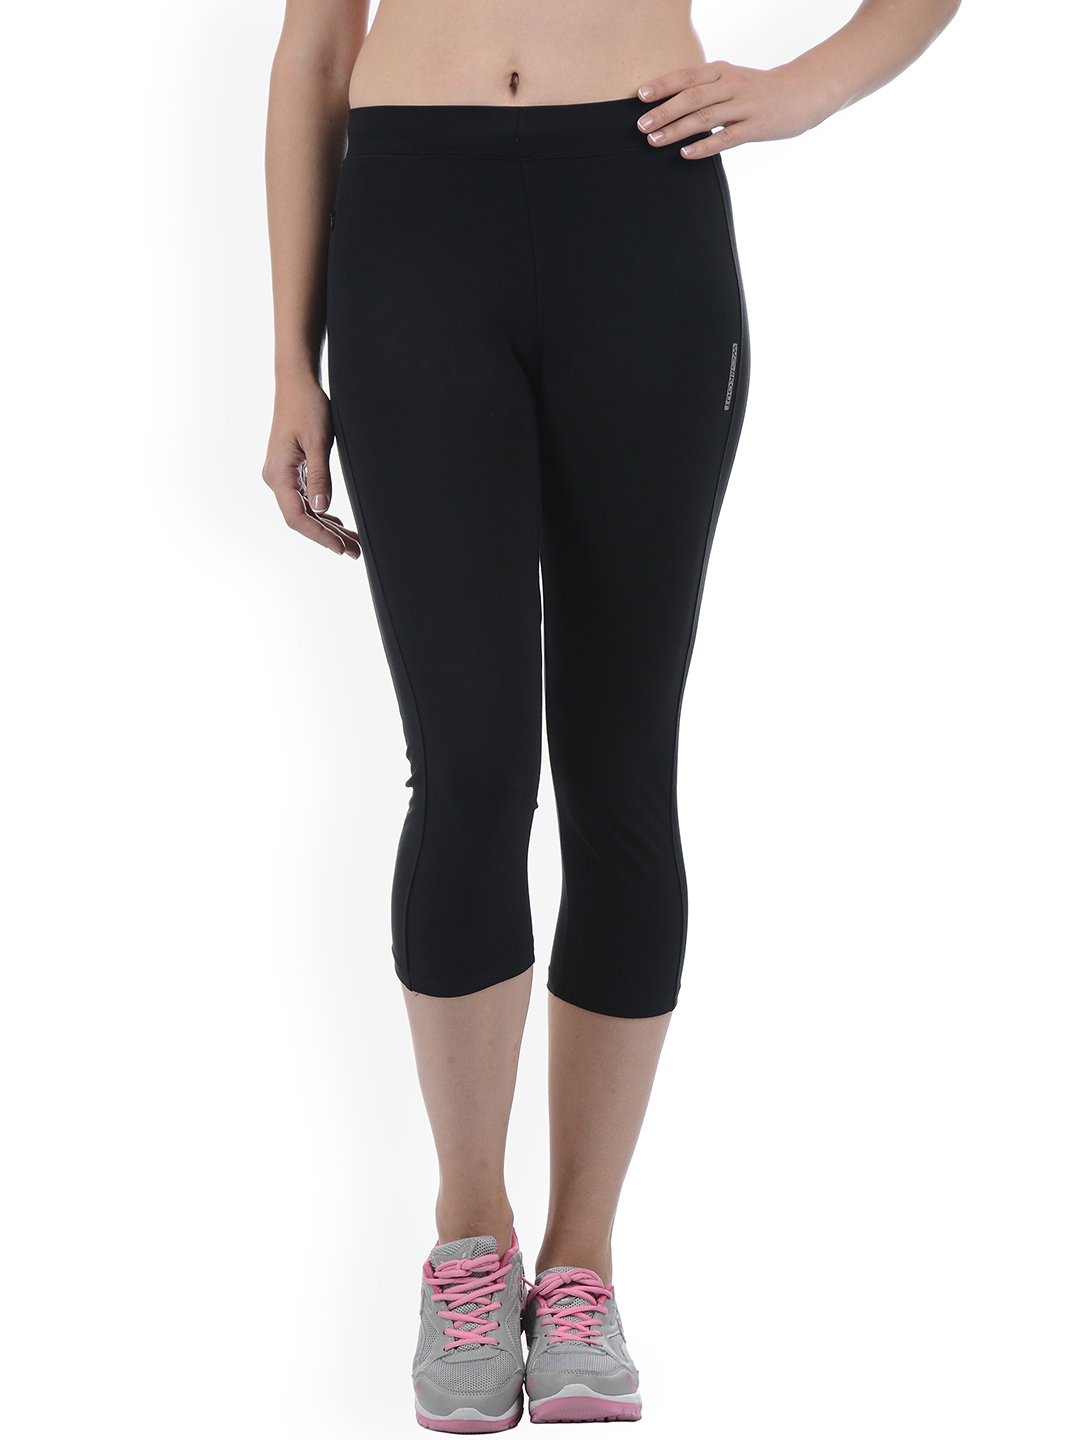 Womens Black Capri Leggings with Pockets  Buy Capri Tights at BARA BARA  Sportswear